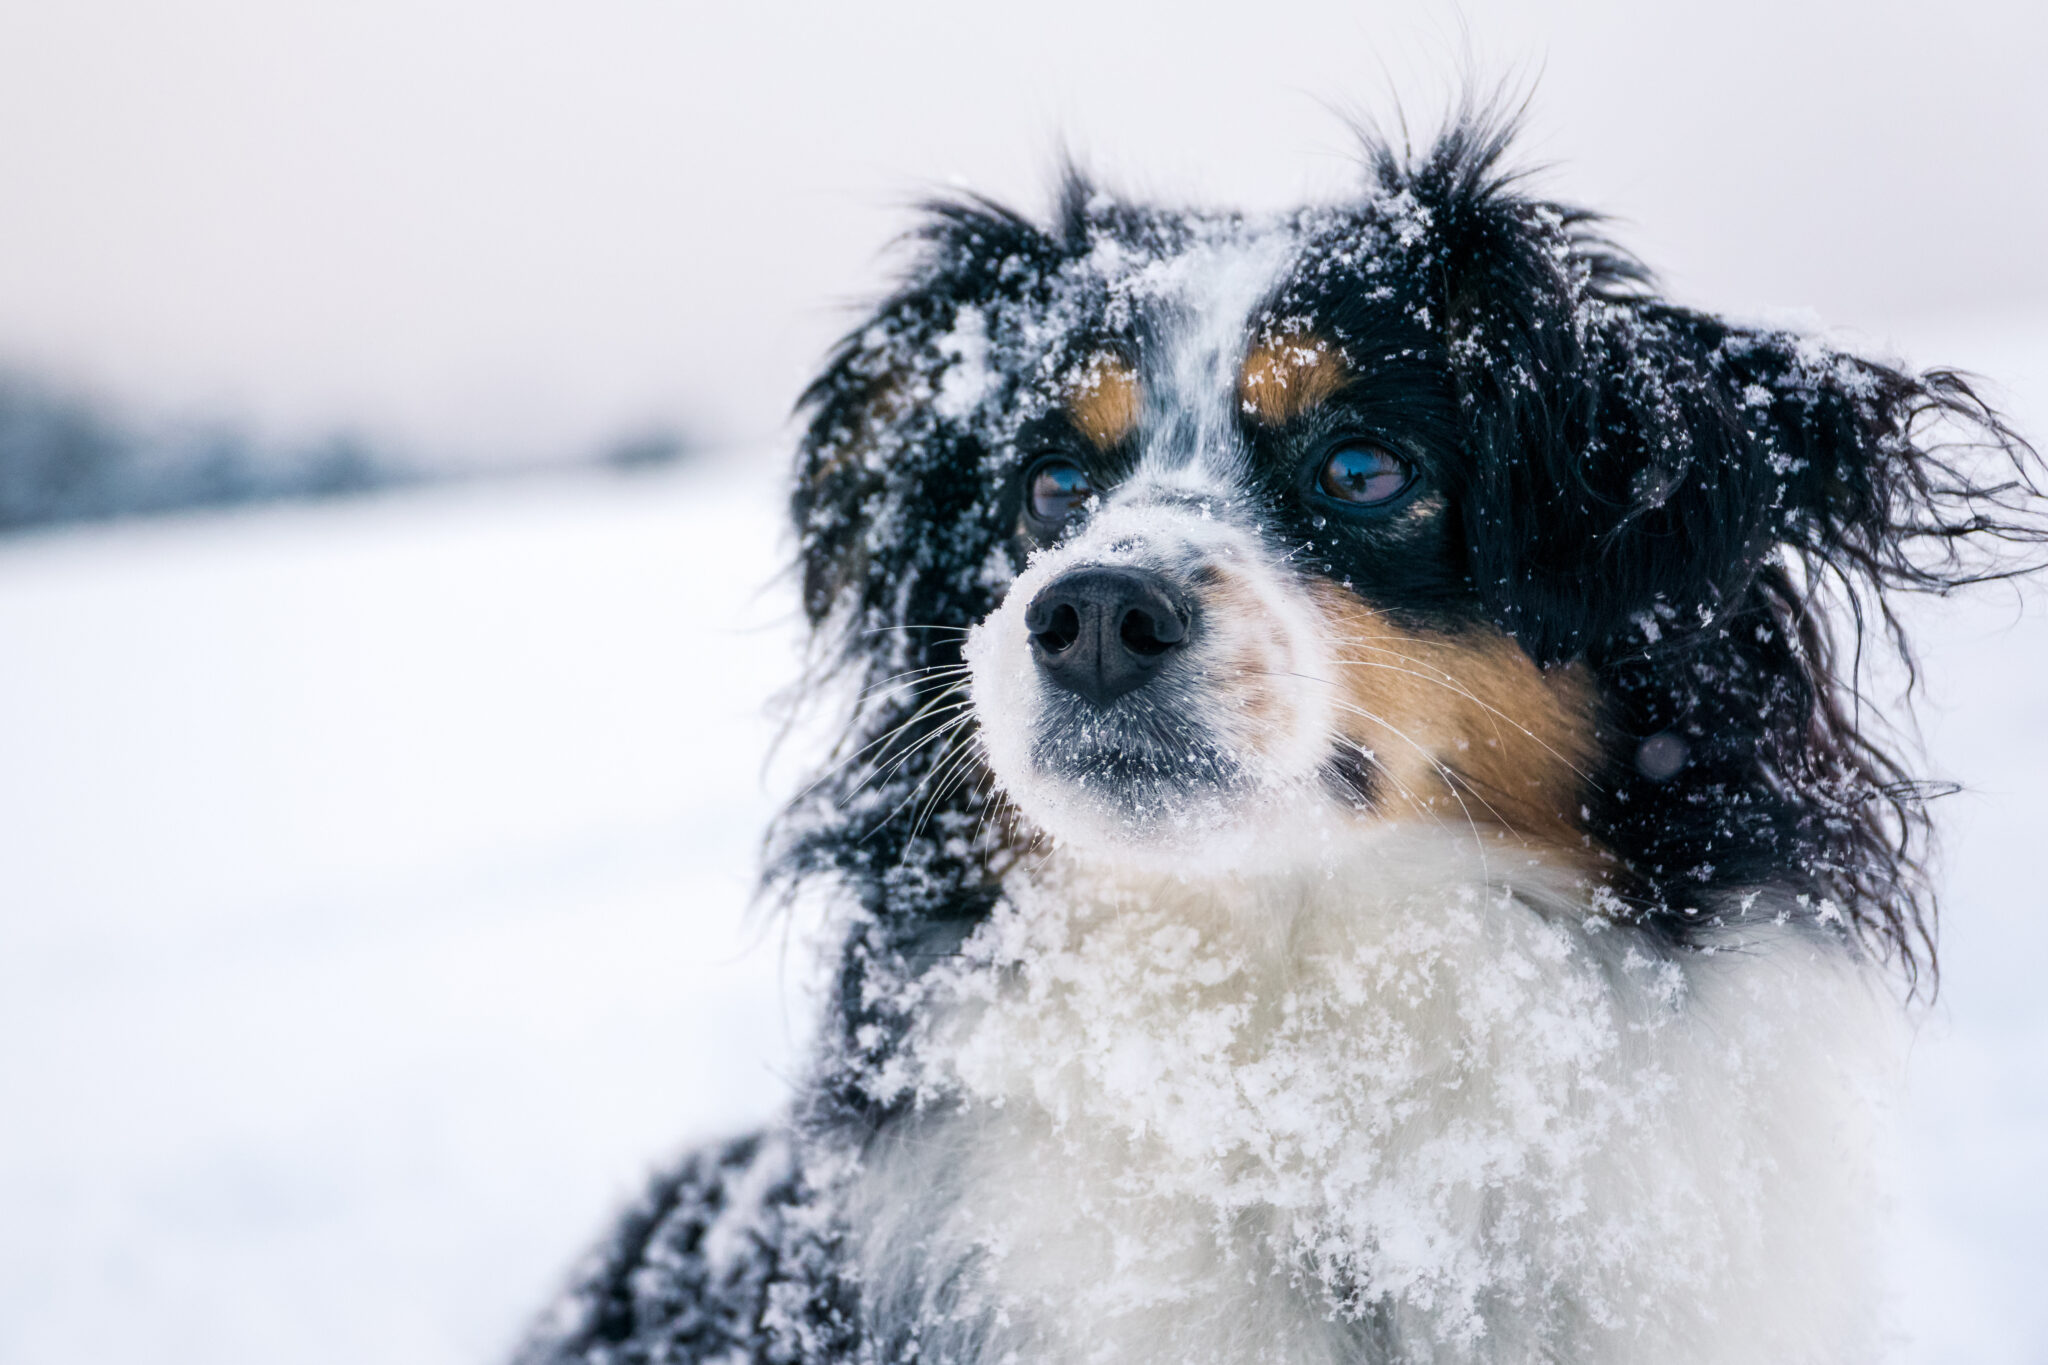 dog hypothermia